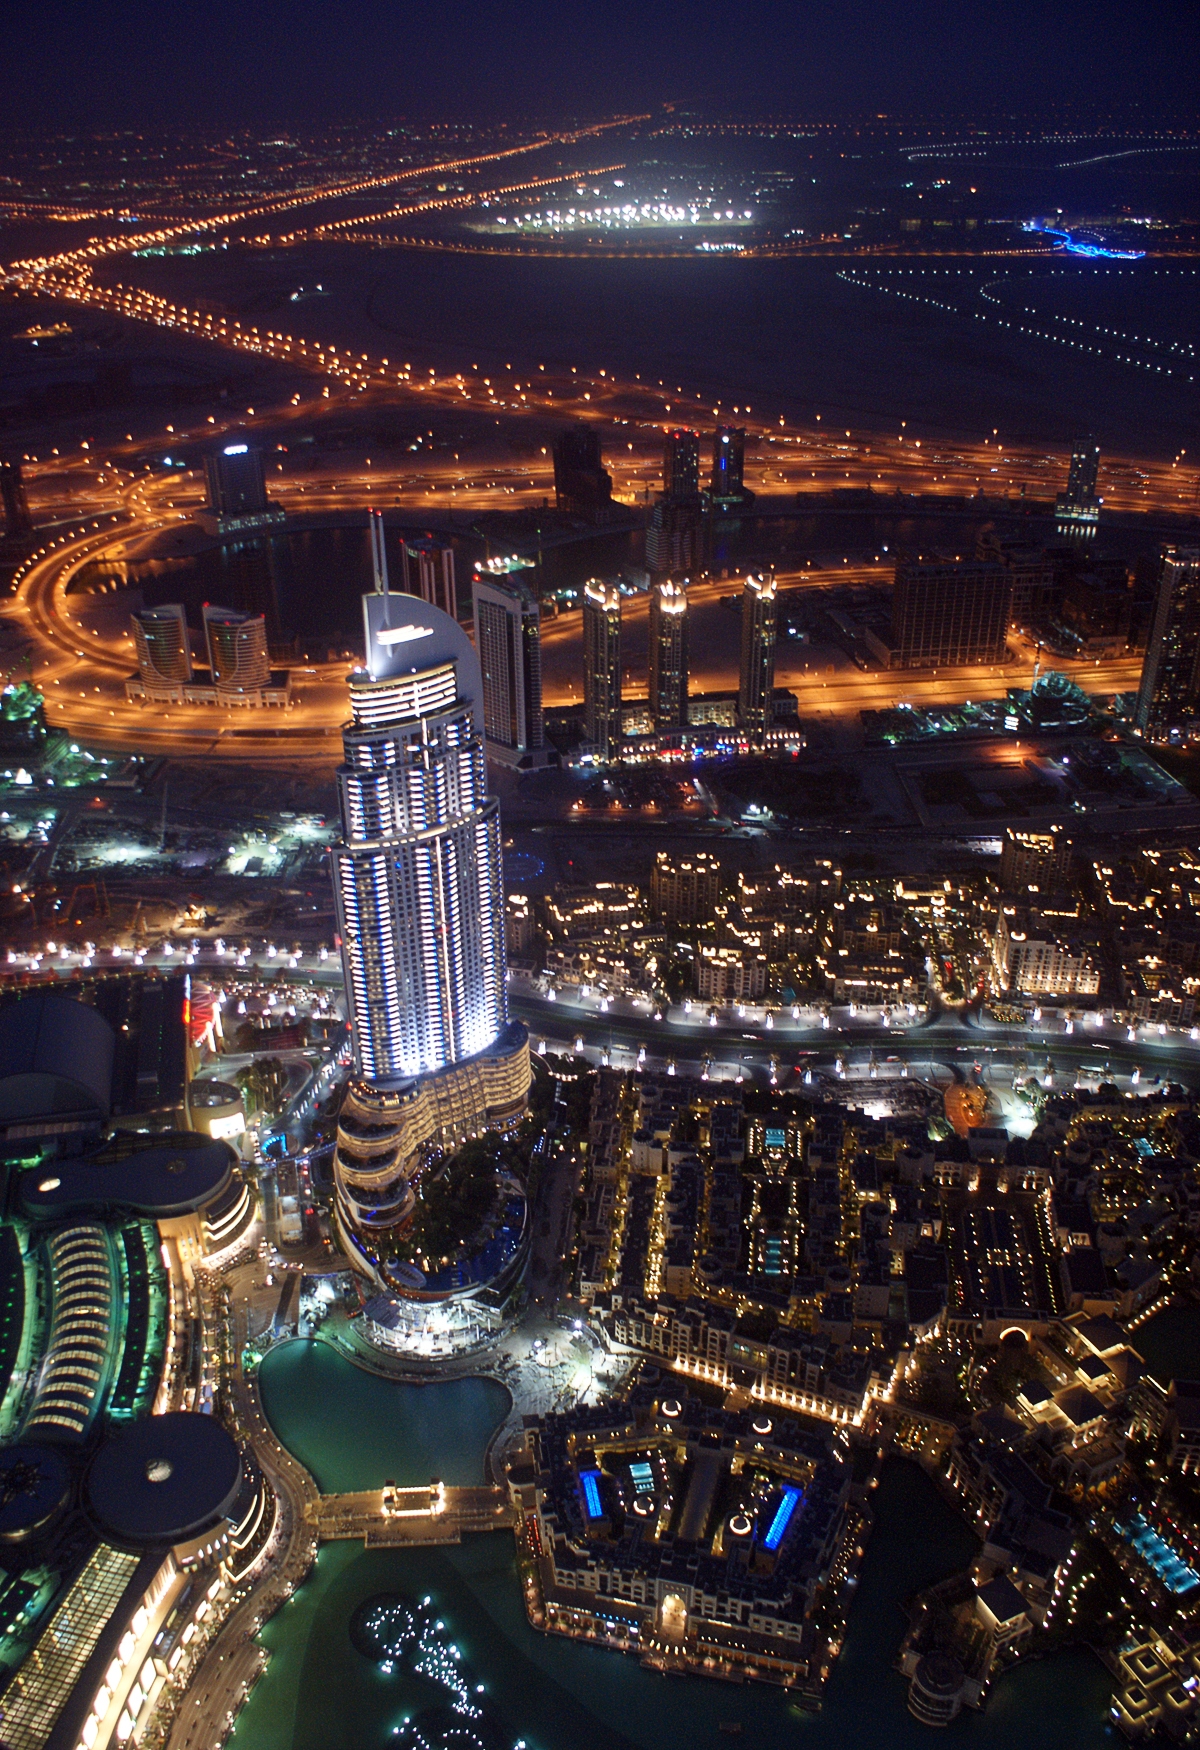 Dubai At Night (Burj Khalifa)